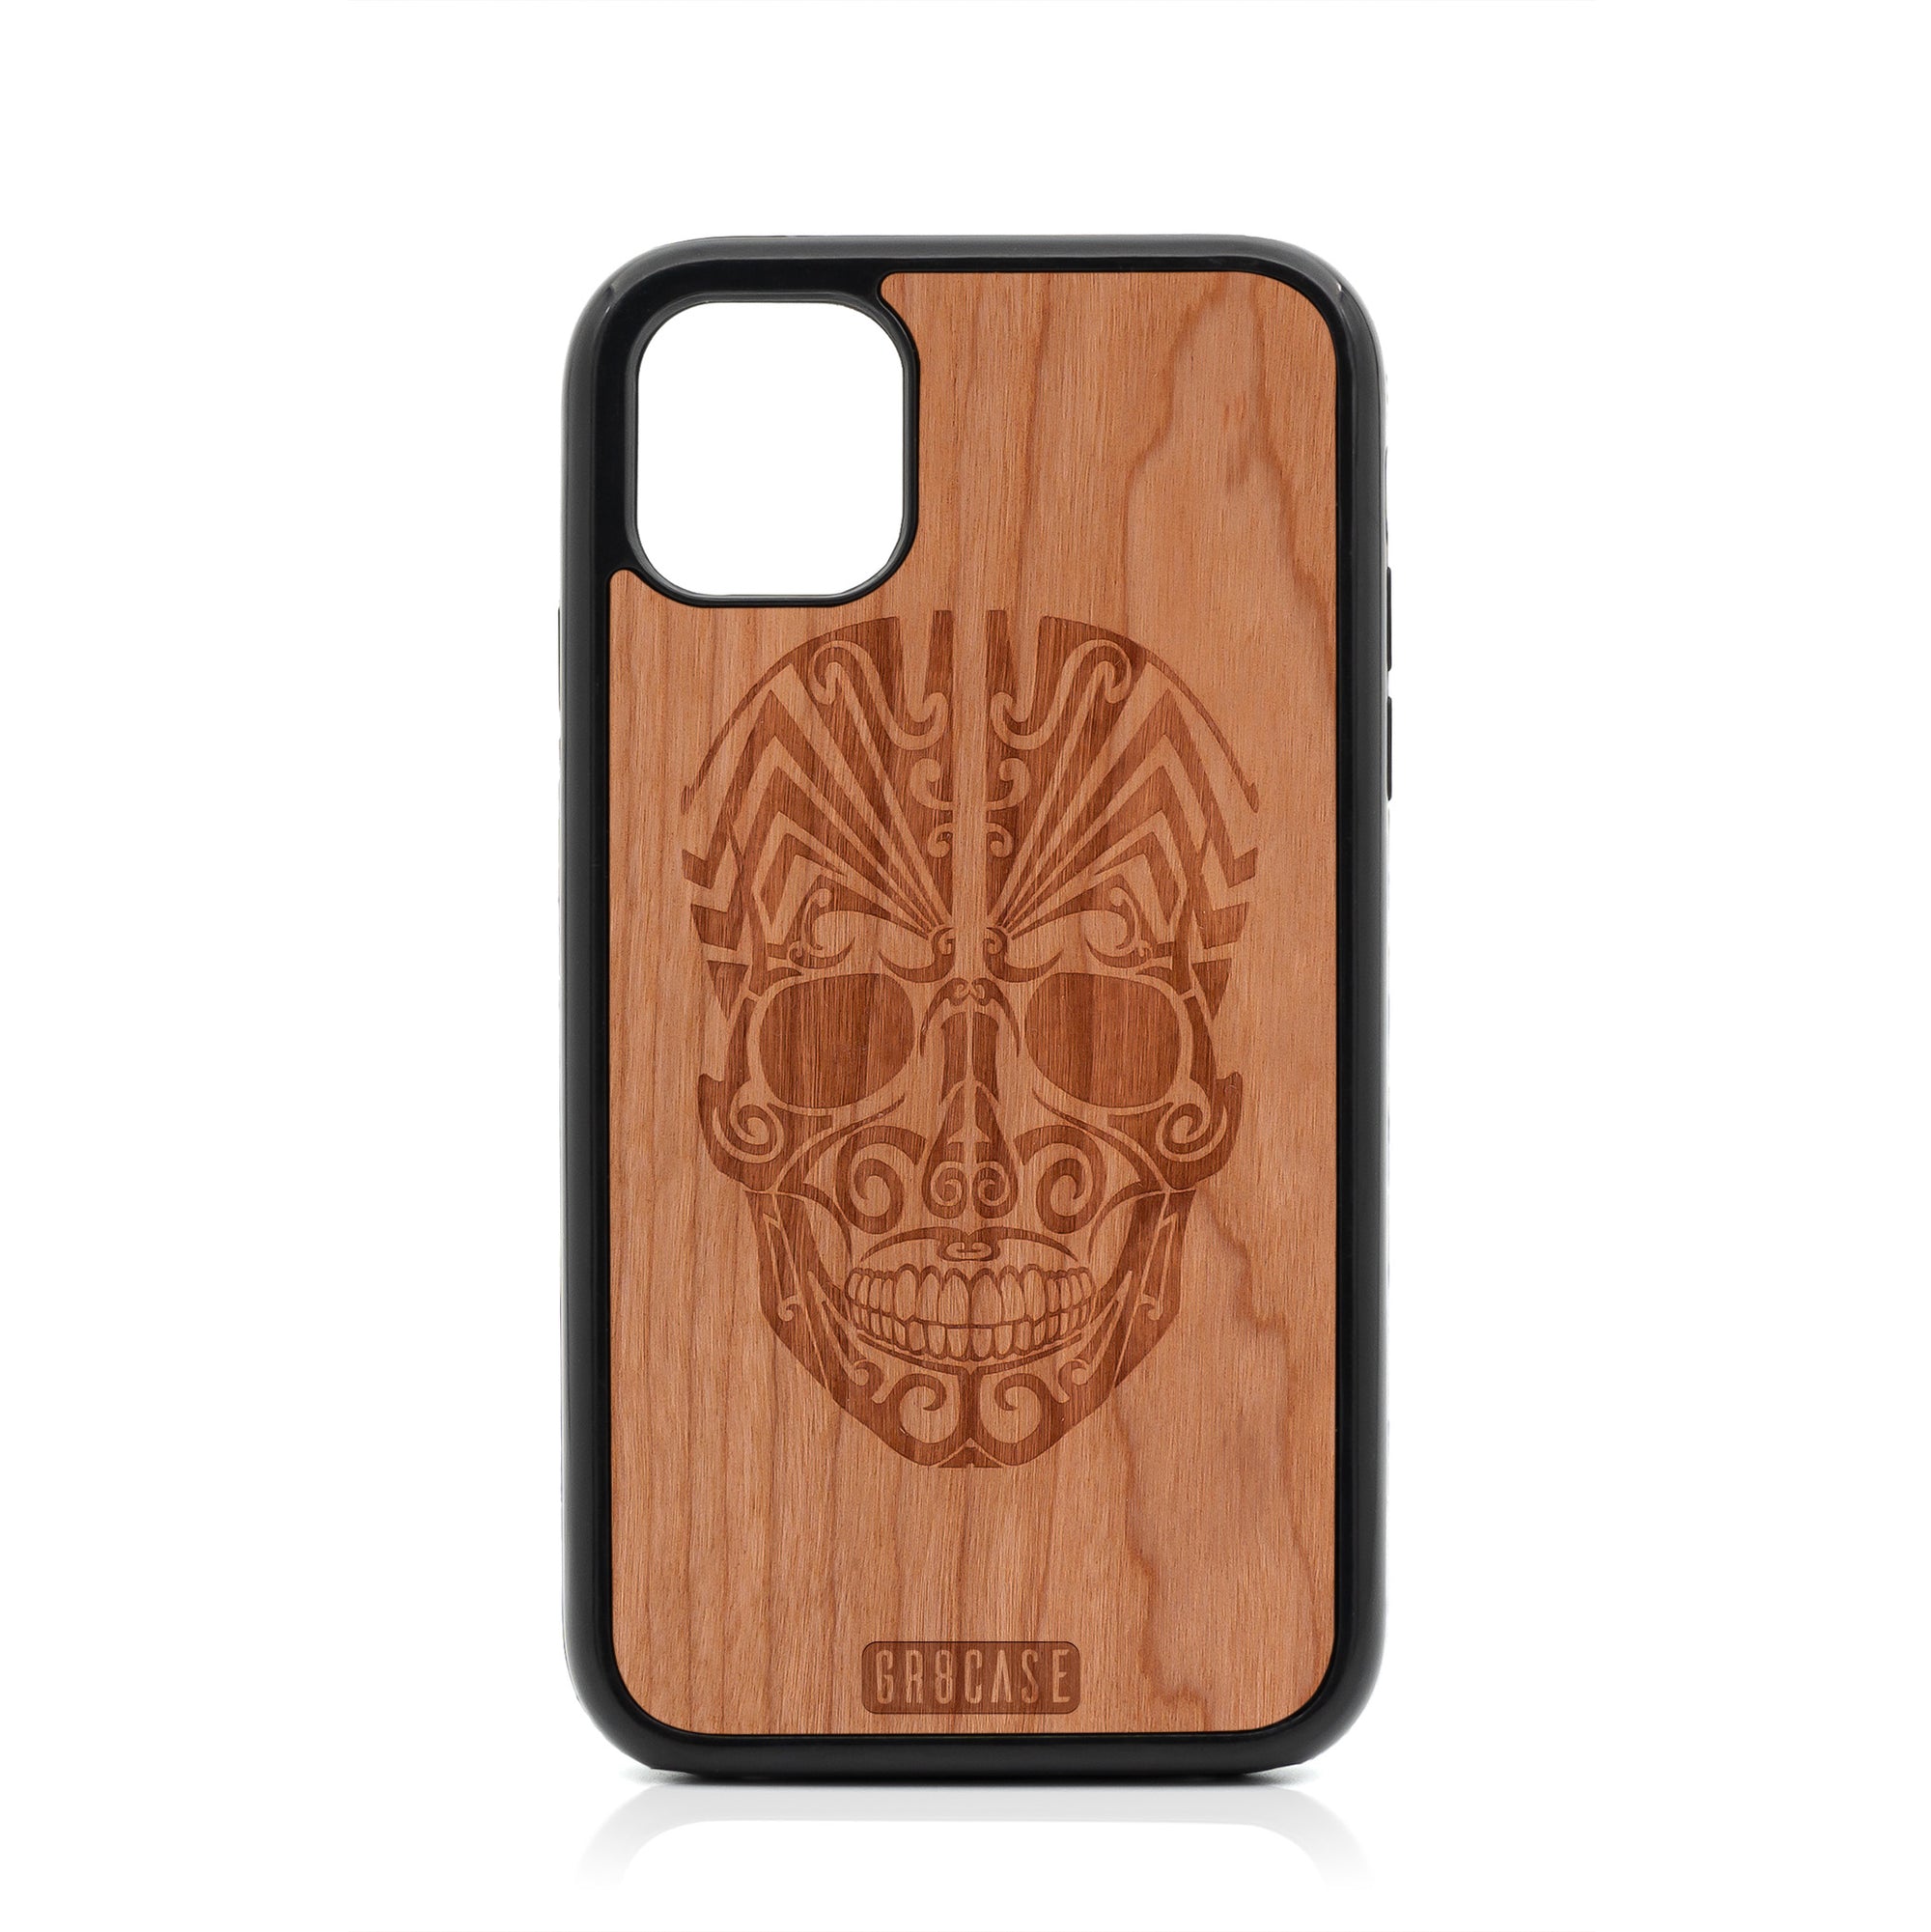 Tattoo Skull Design Design Wood Case For iPhone 11 Pro Max